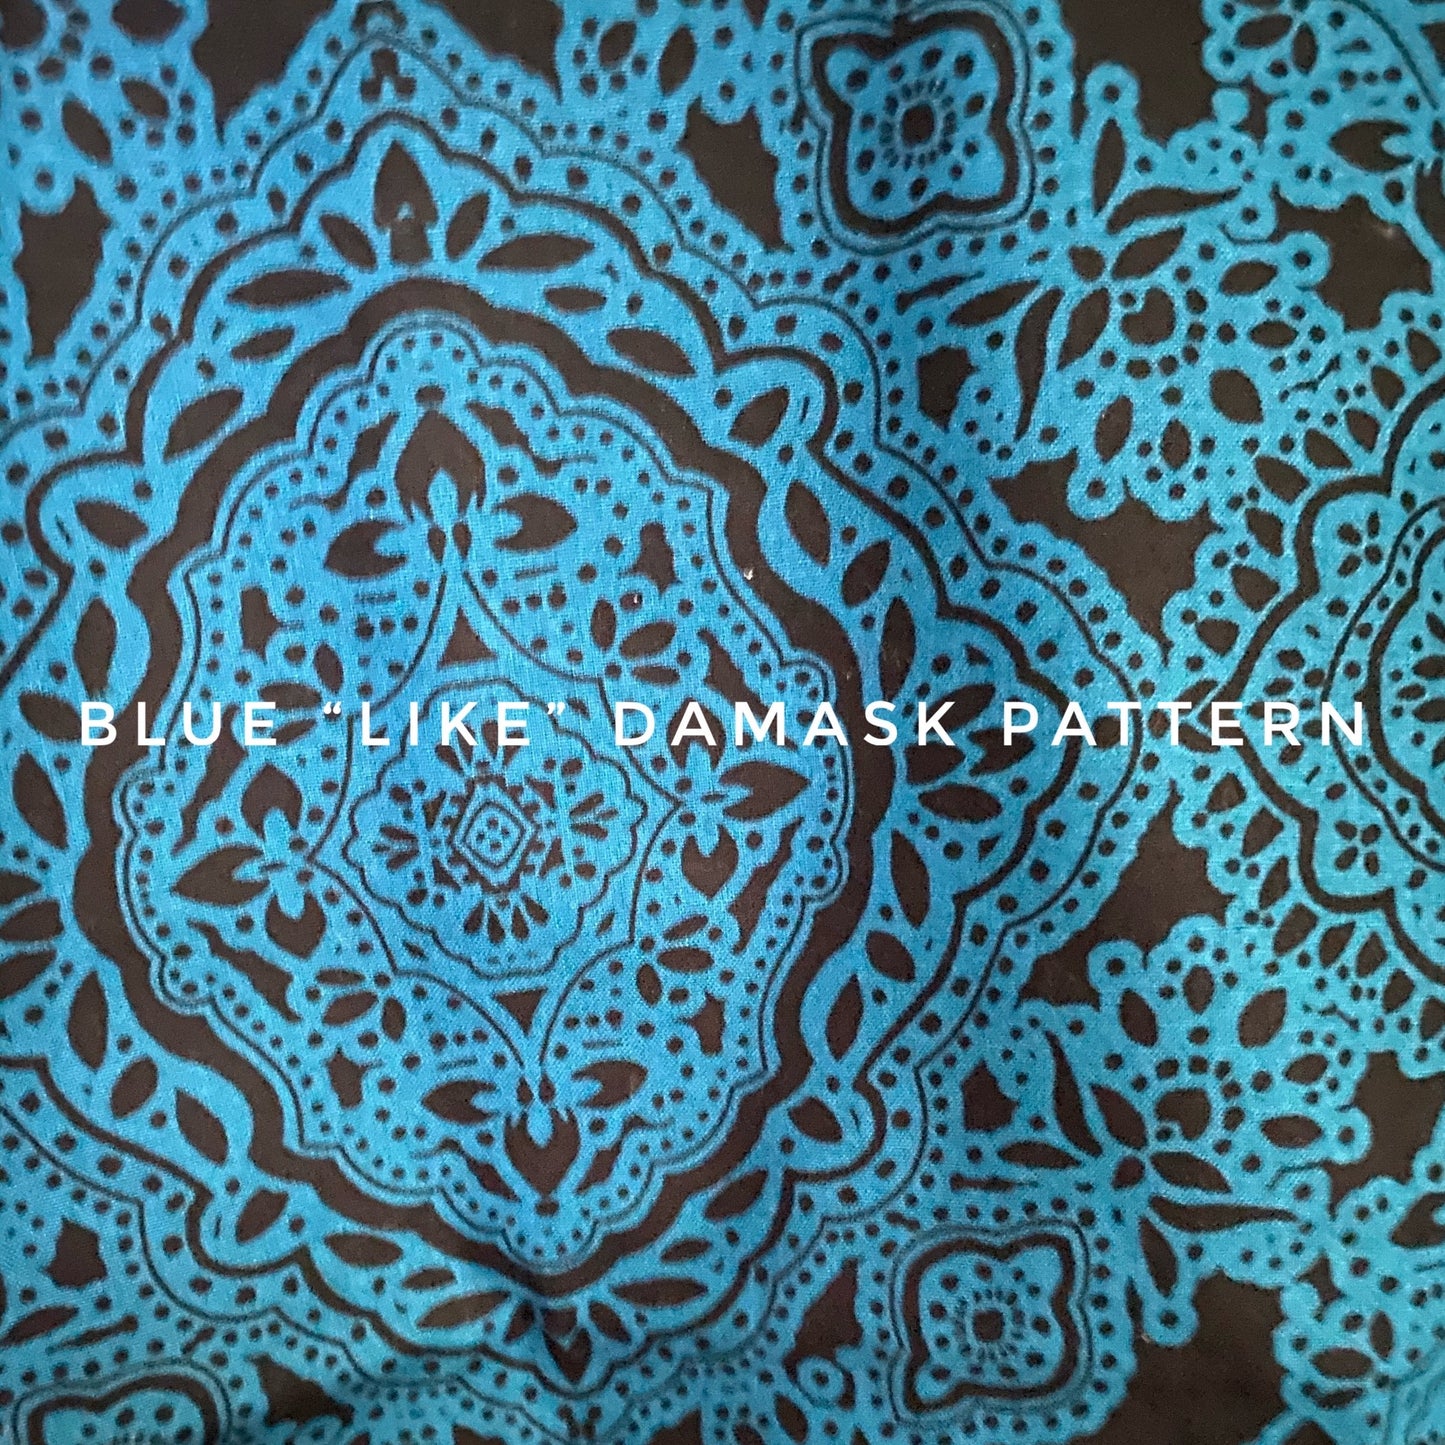 Blue “Damask-like” pattern Double Layer Face Mask